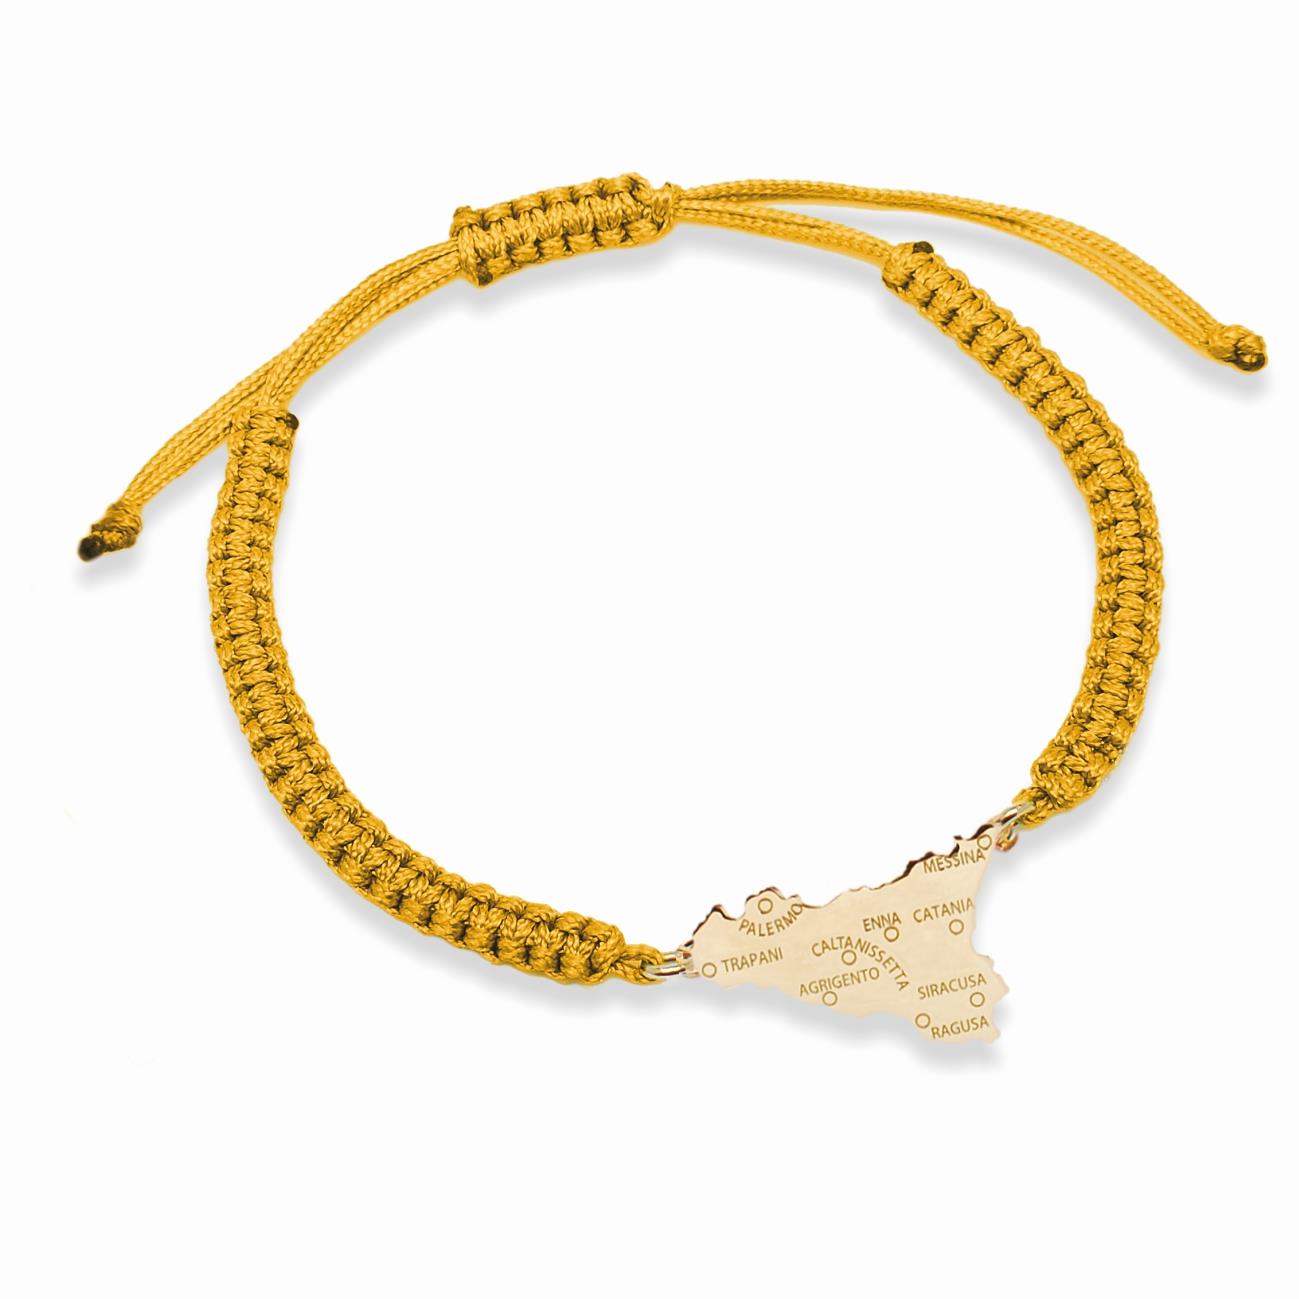 Mustard colored nylon bracelet and Sicily symbol in golden silver - MY SICILY